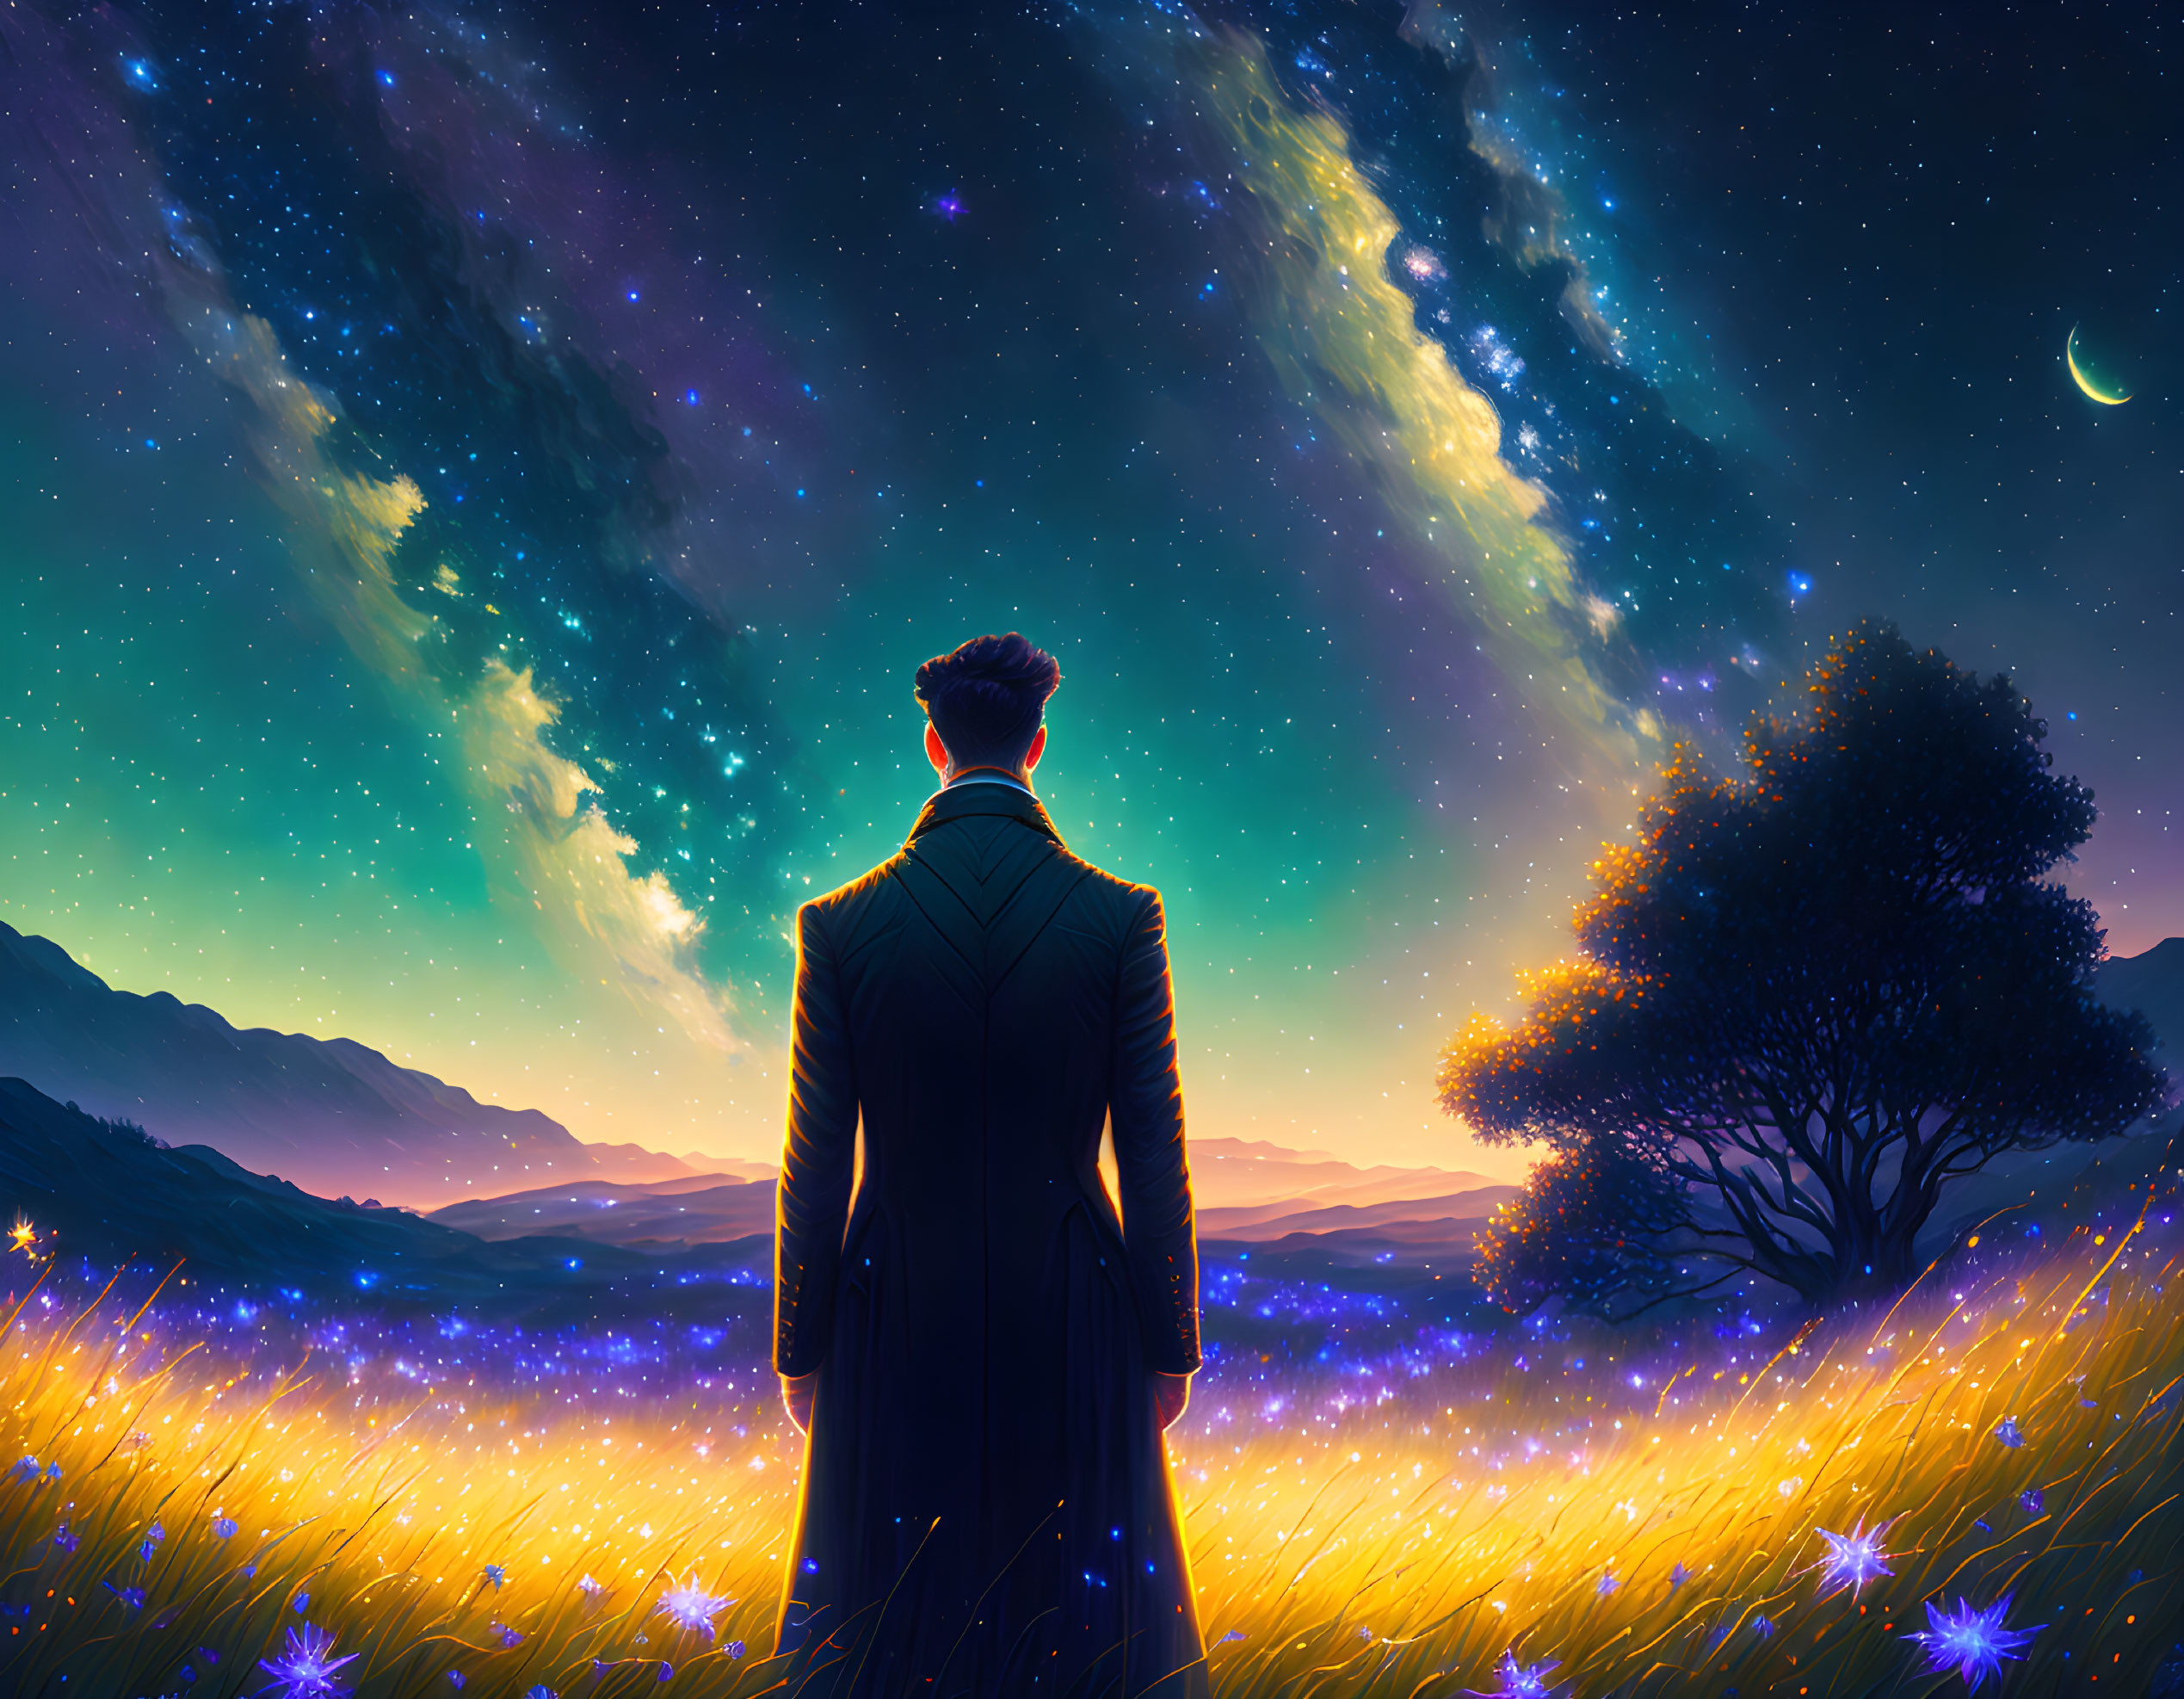 Man admires starry sky in luminous field at dusk horizon.